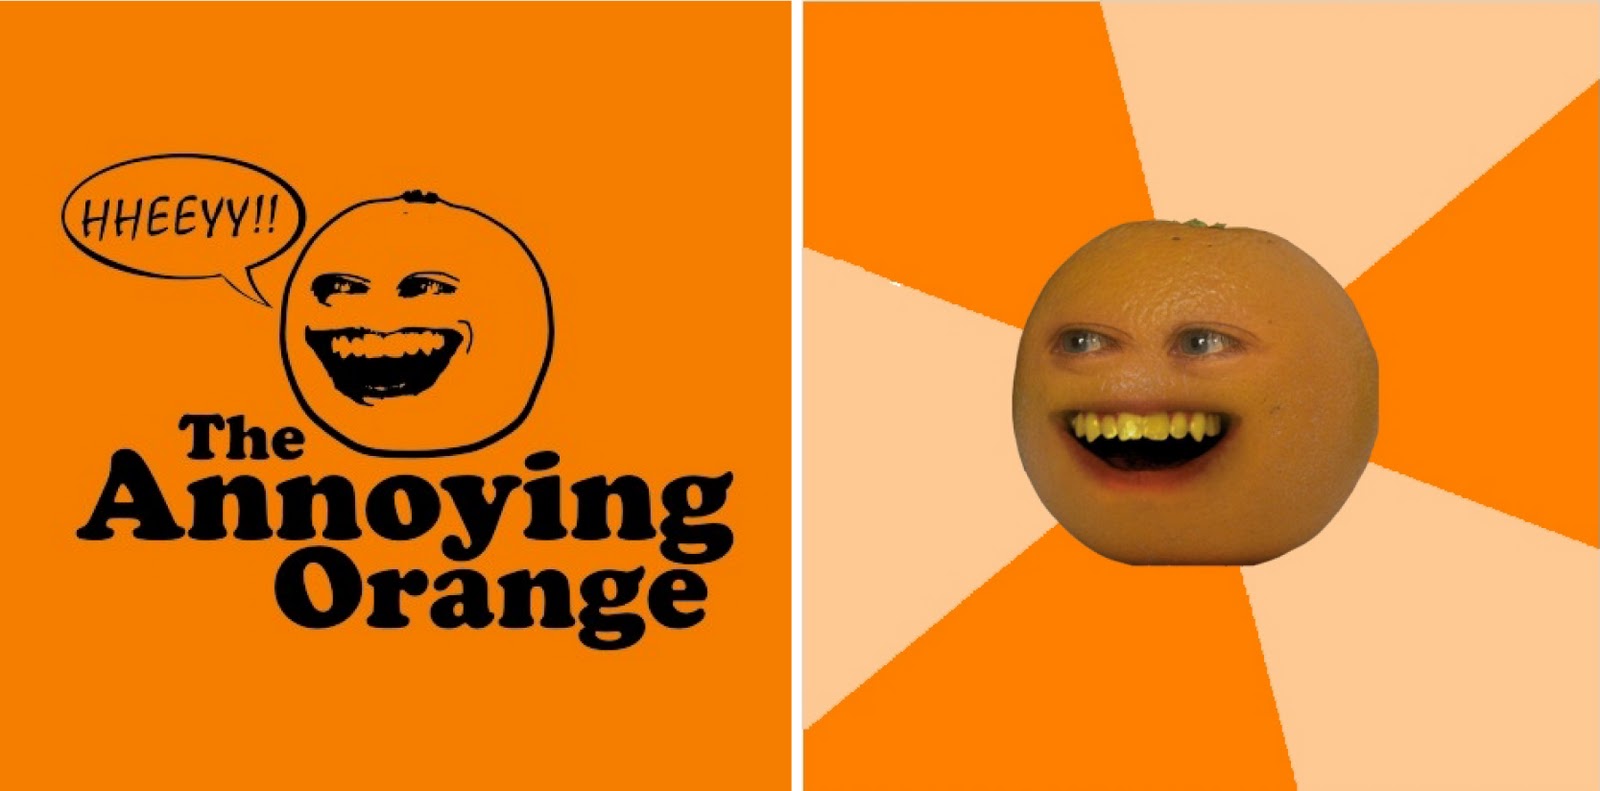 http://1.bp.blogspot.com/-y_L6aTU7Z-M/TVXqFmksQFI/AAAAAAAAAkY/_m9GFxVEUiU/s1600/Annoying+Orange4-04.jpg